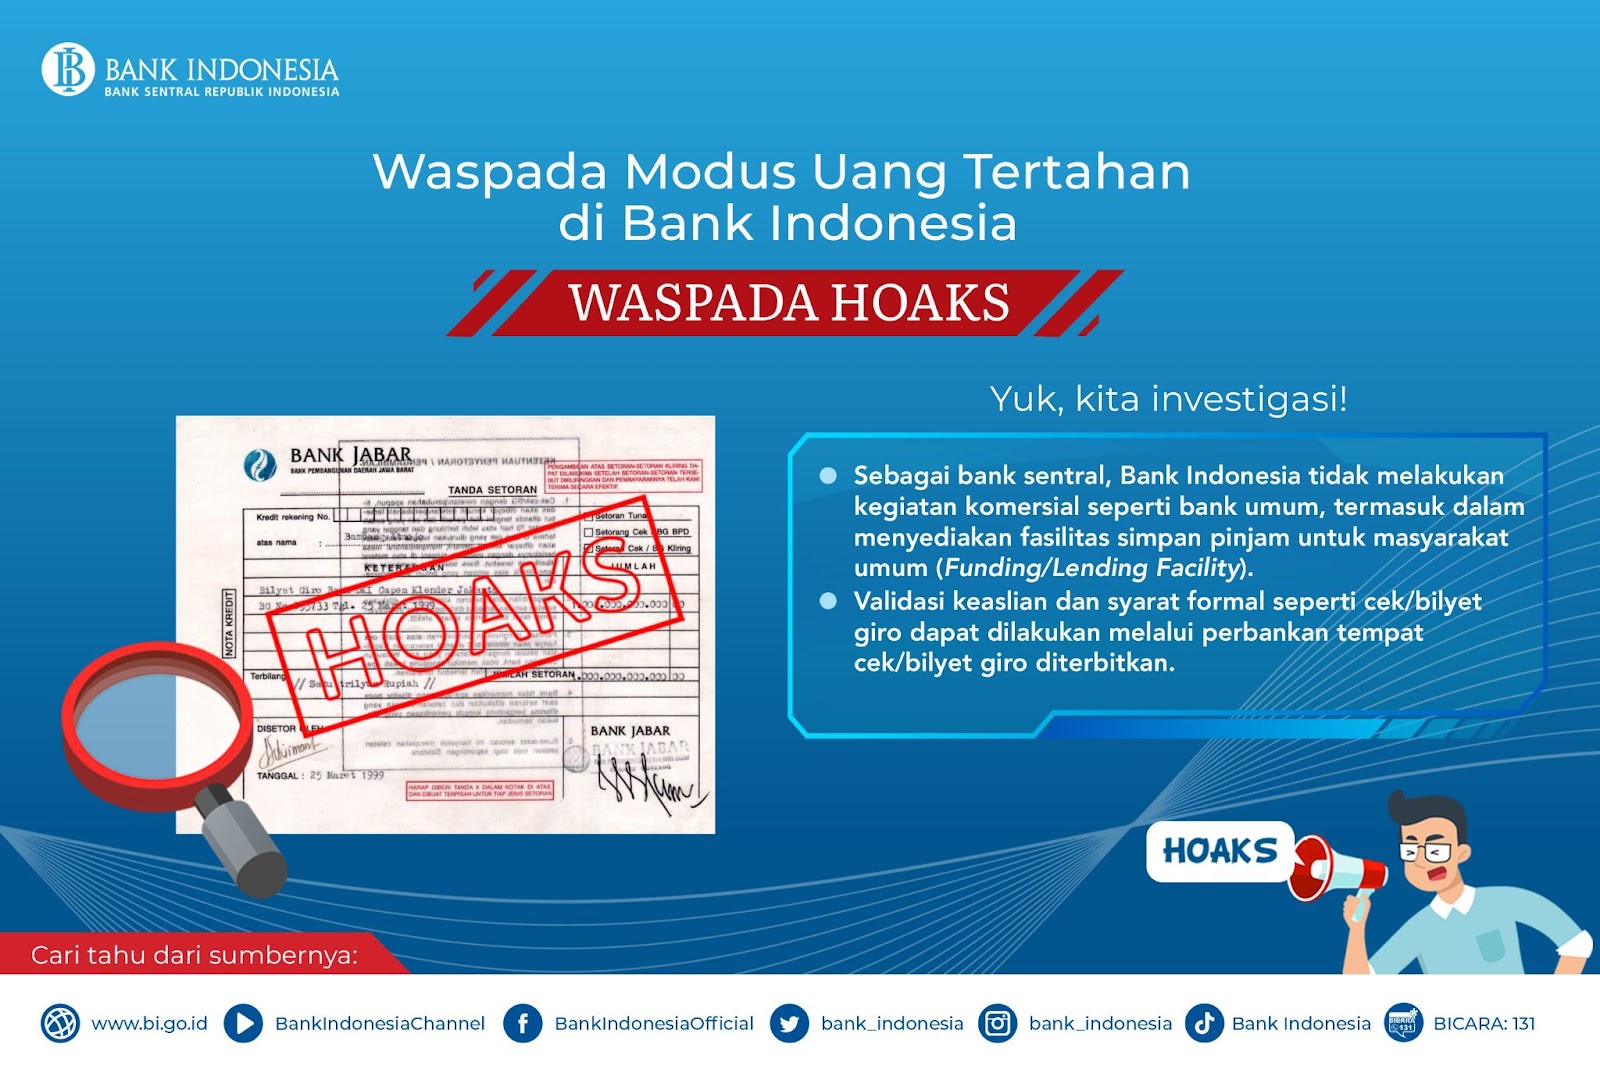 awas-modus-uang-tertahan-di-bank-indonesia-bi-nggak-pernah-pegang-uang-nasabah-gan